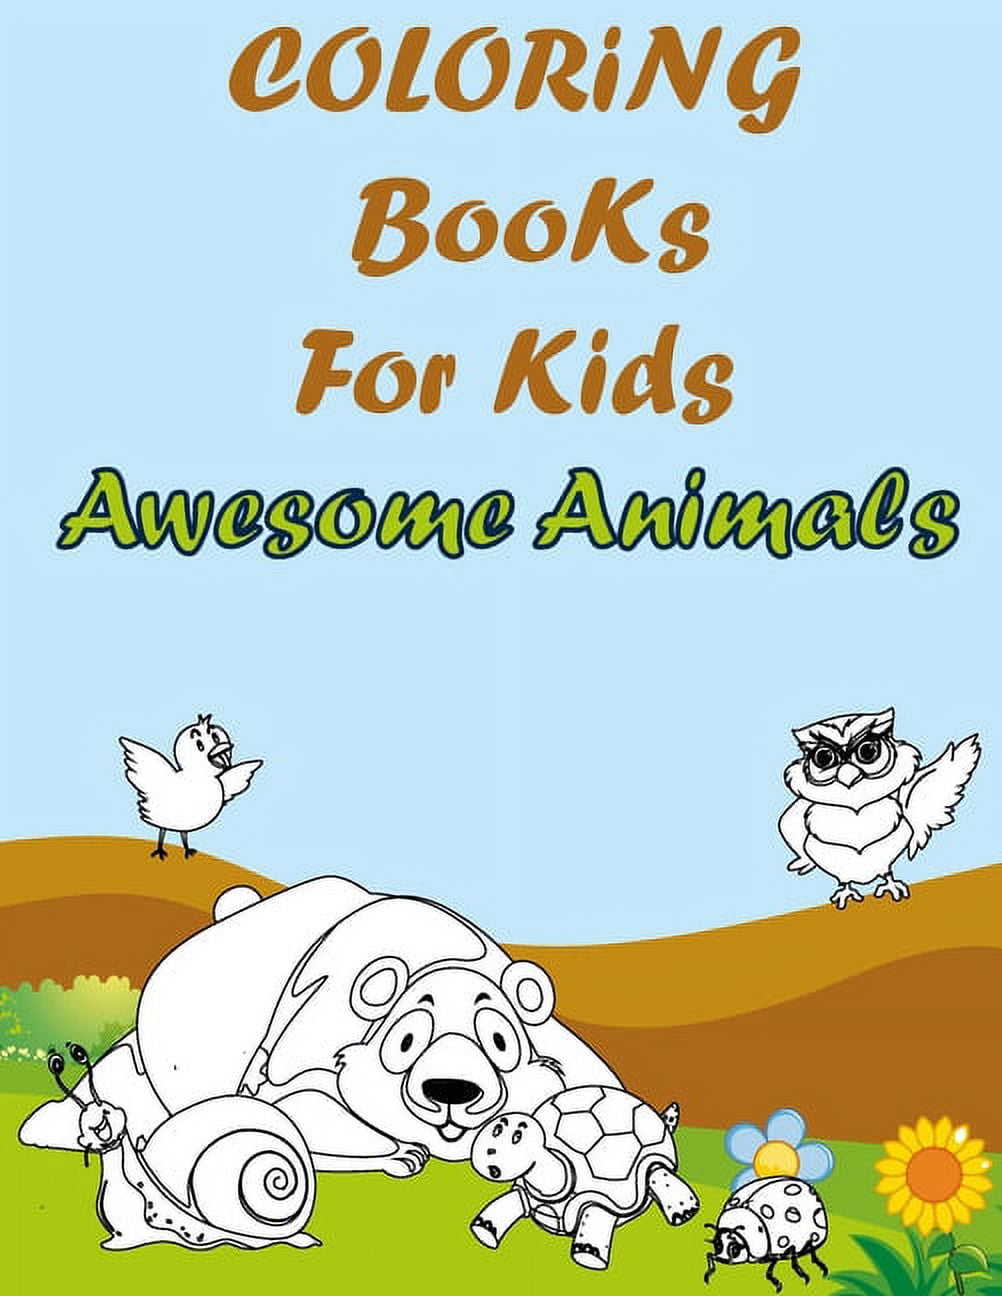 Adult Coloring Books Set - 3 Coloring Books for Grownups - 120 Unique Animals, Scenery & Mandalas